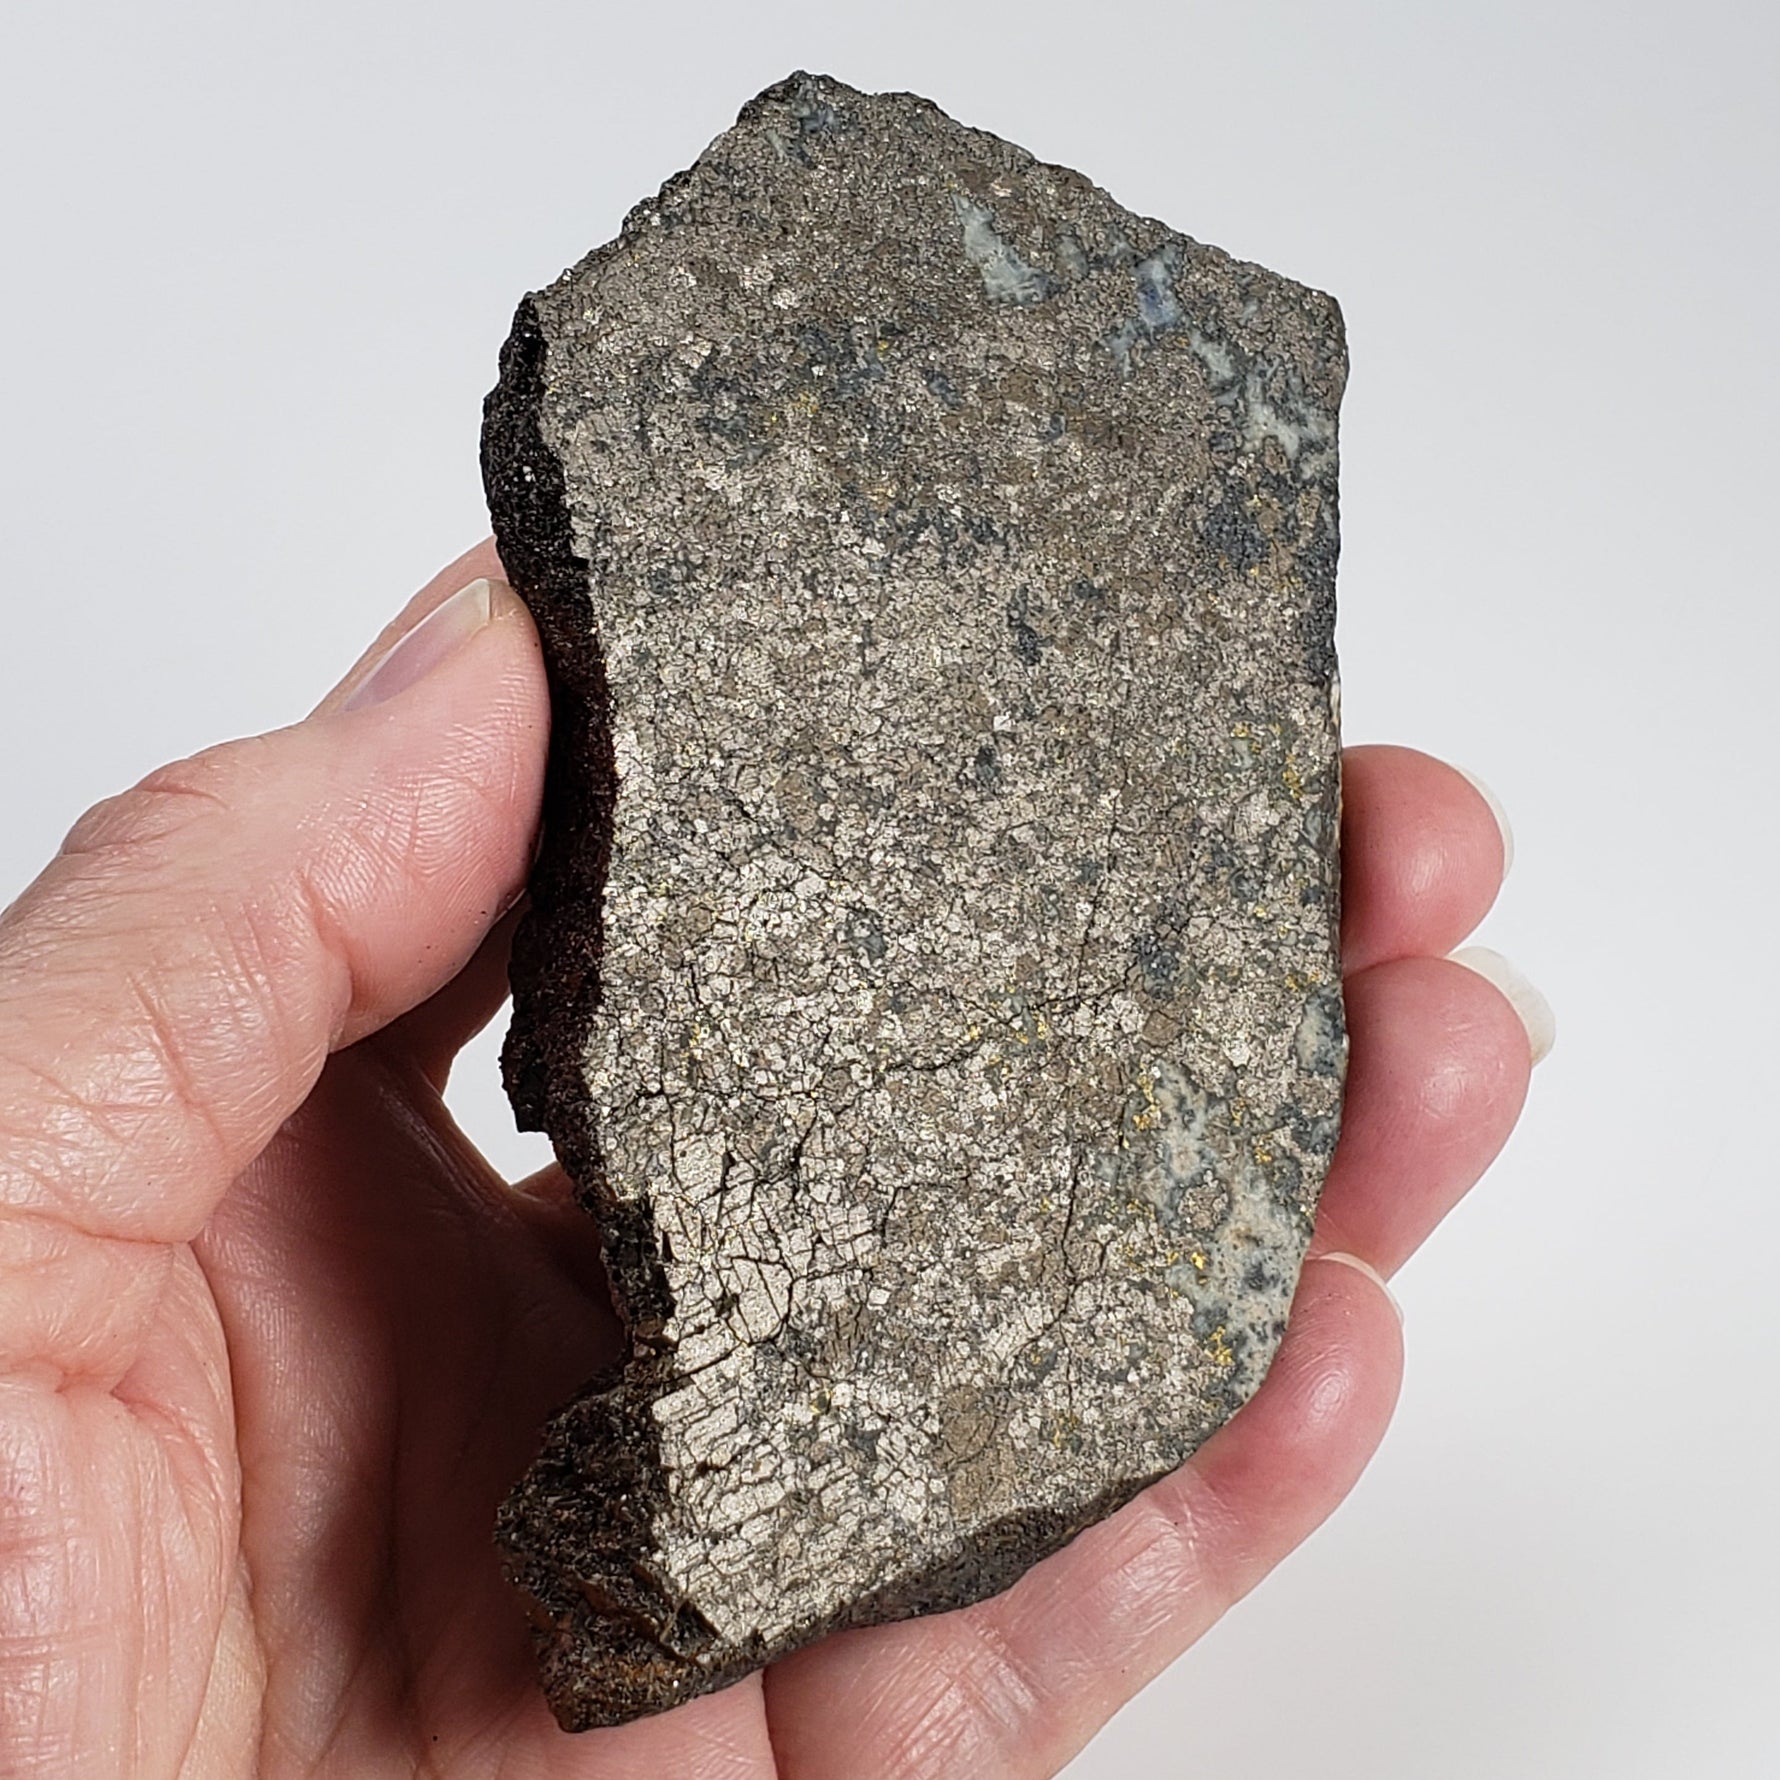 Impact Breccia | Part Slice | 222.8 Grams | Metal Rich Impactite | Sudbury Structure, Canada